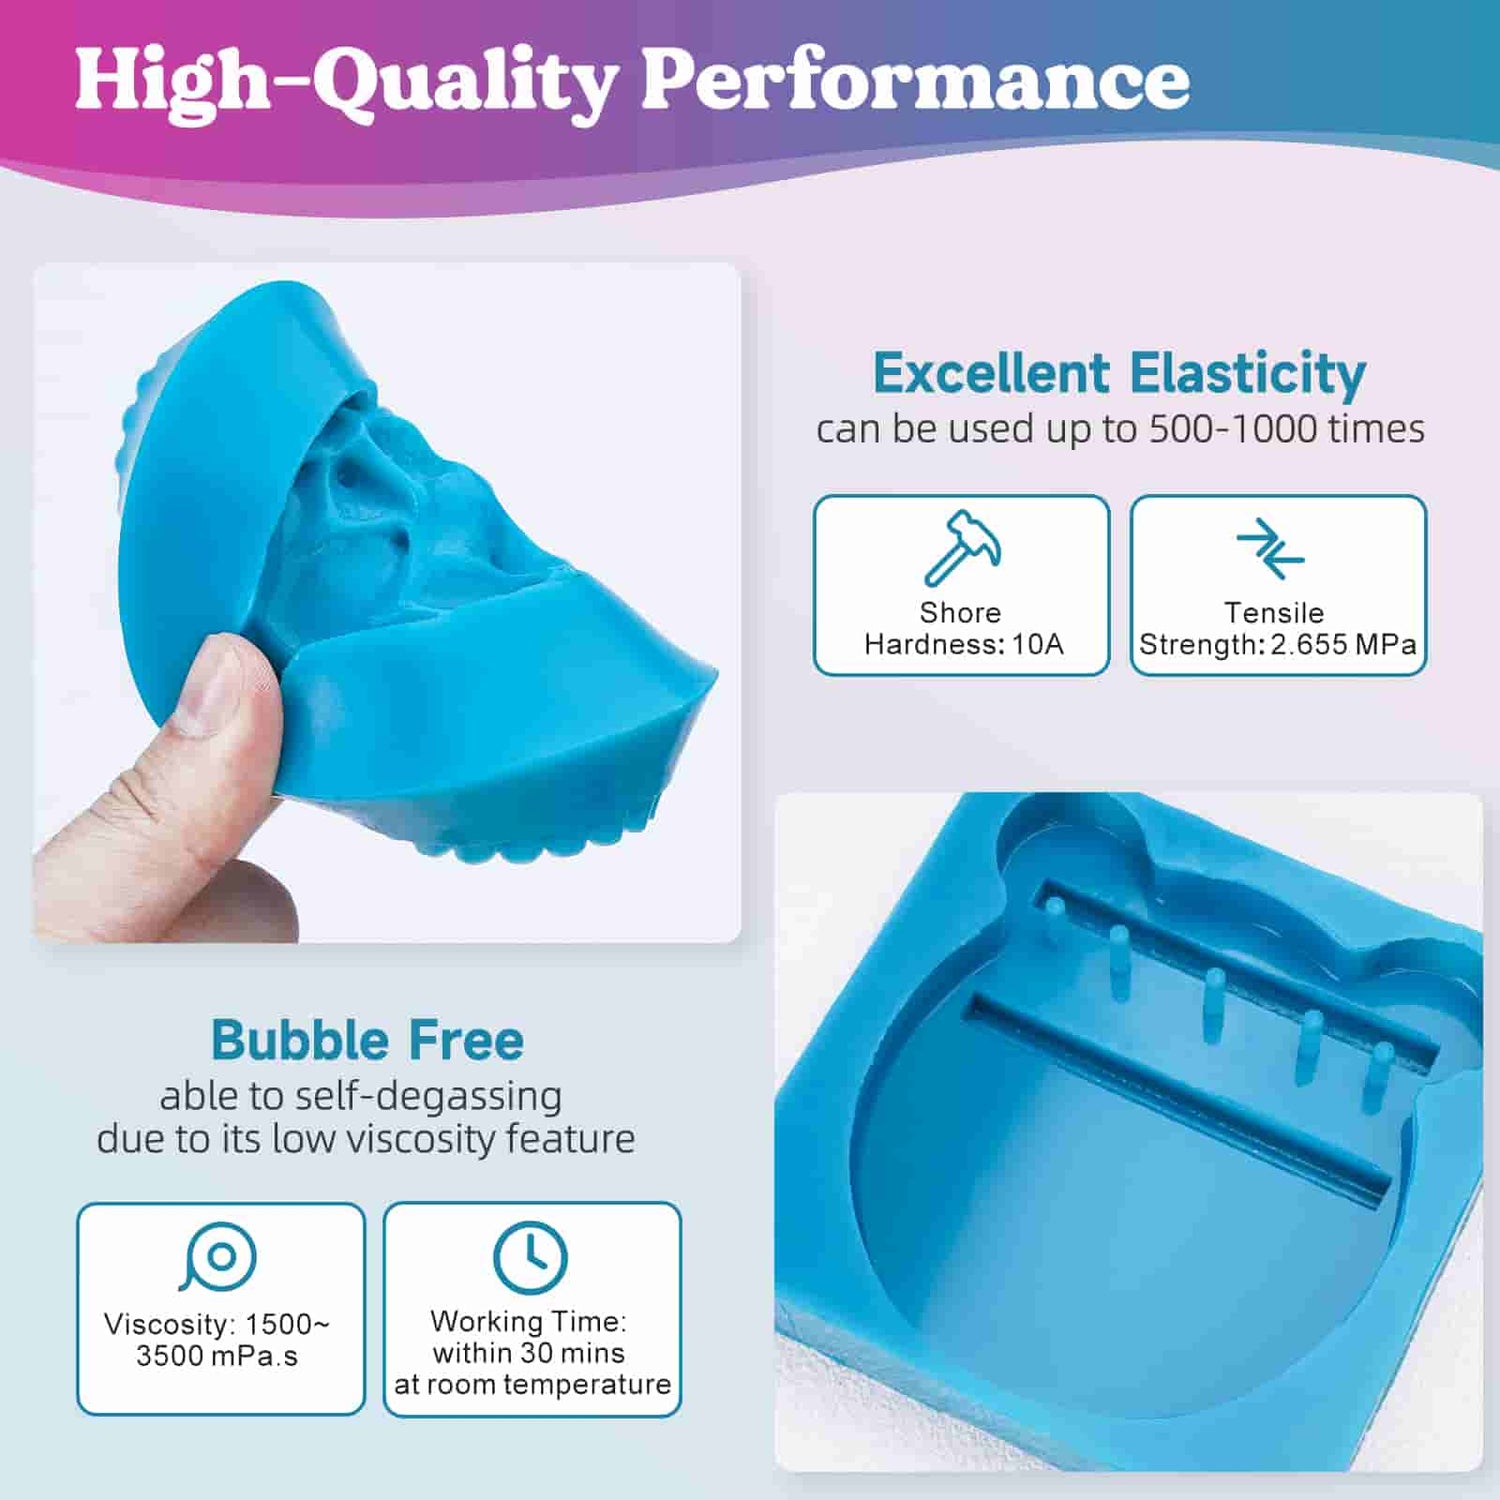 High temperature resistant silicone rubber 1 kg - V-Sure